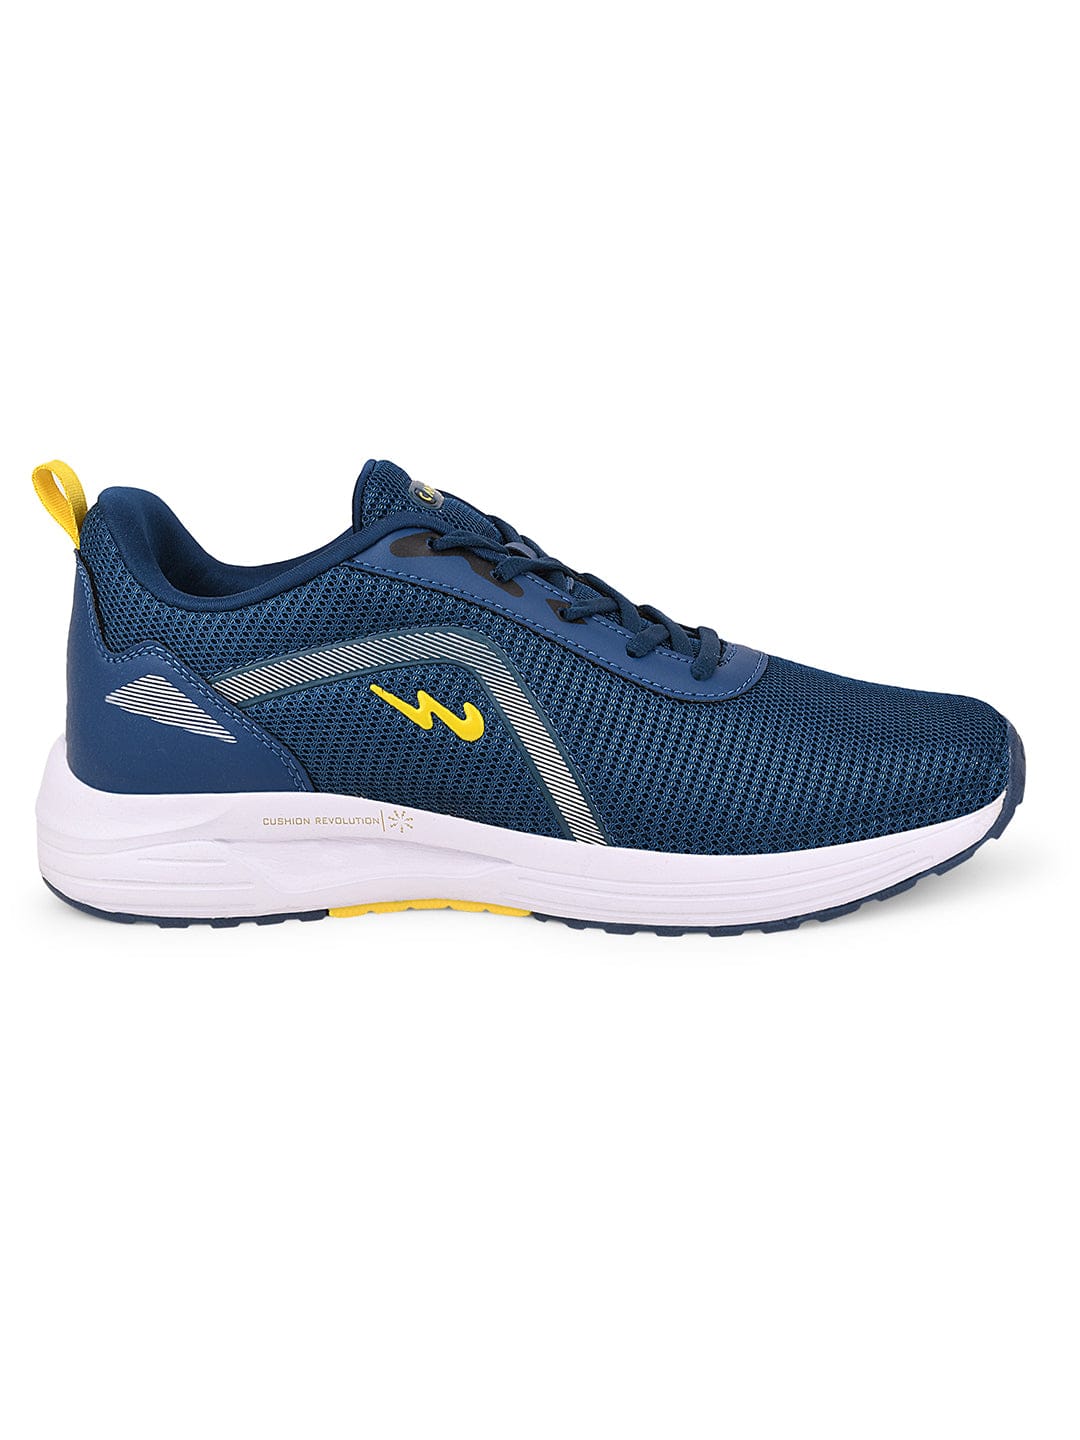 Buy CAMP-GLACIER Blue Men's Running Shoes online Campus Shoes